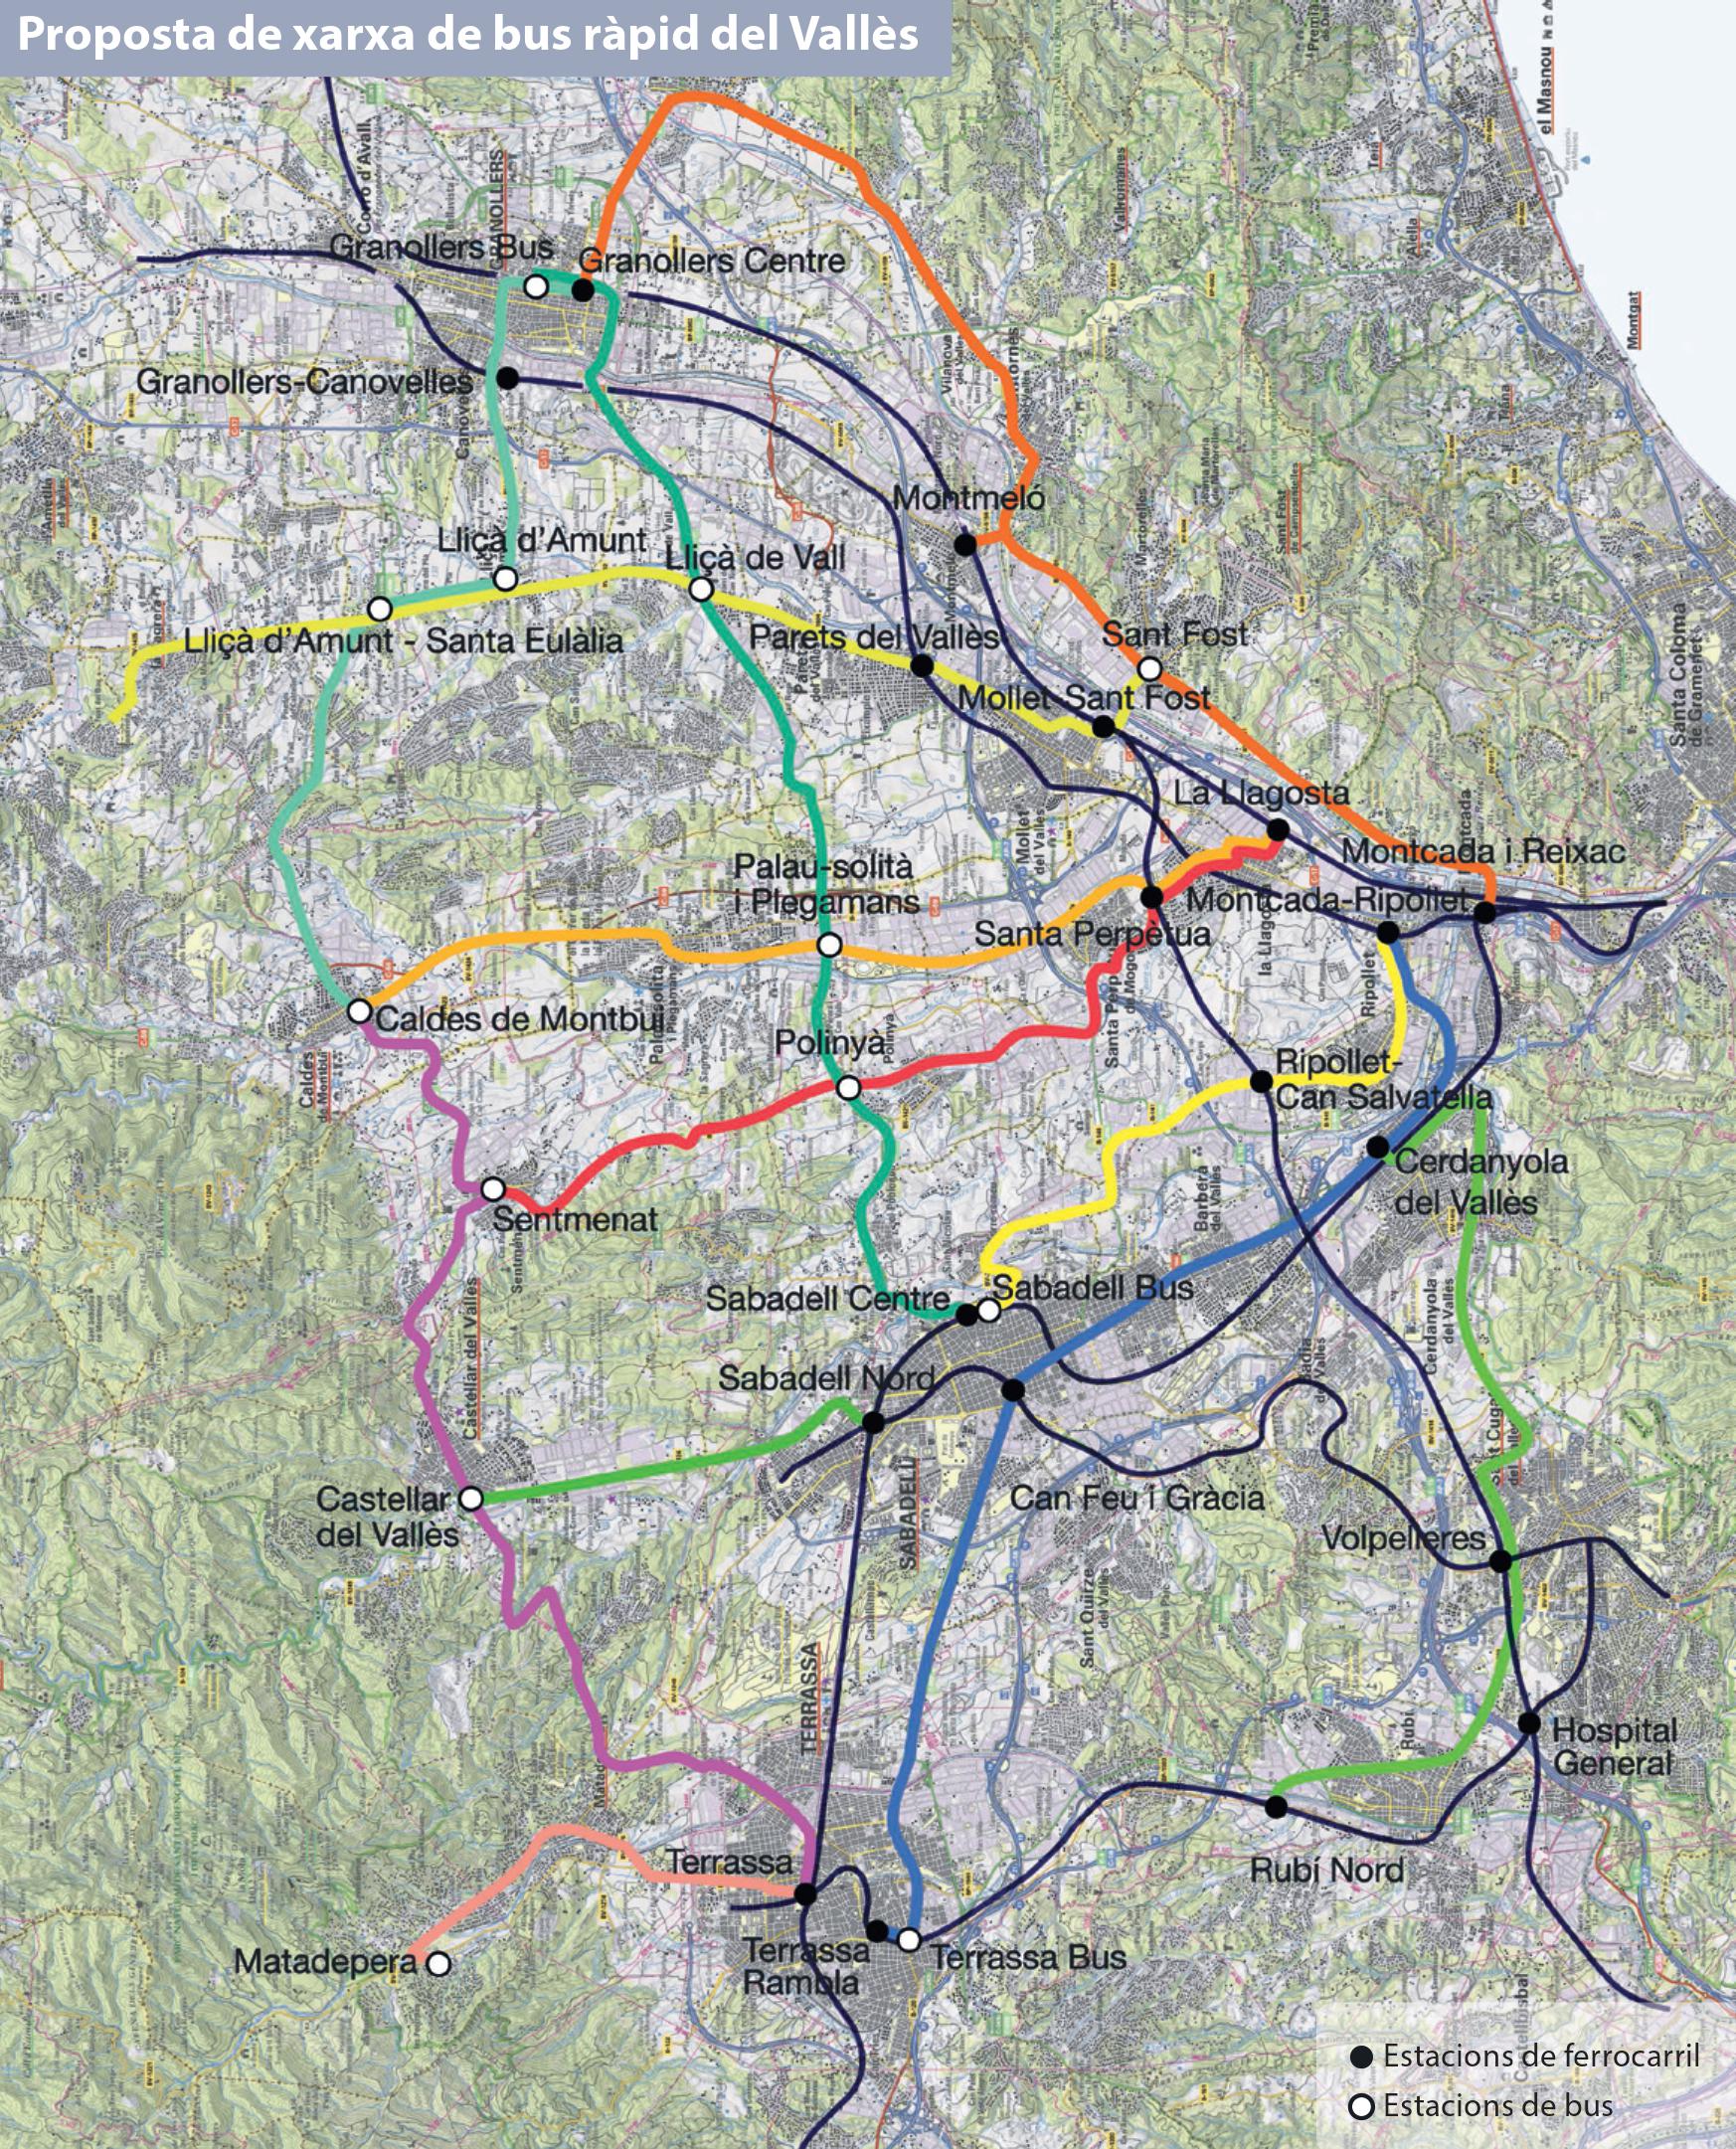 El mapa de la proposta de bus ràpid